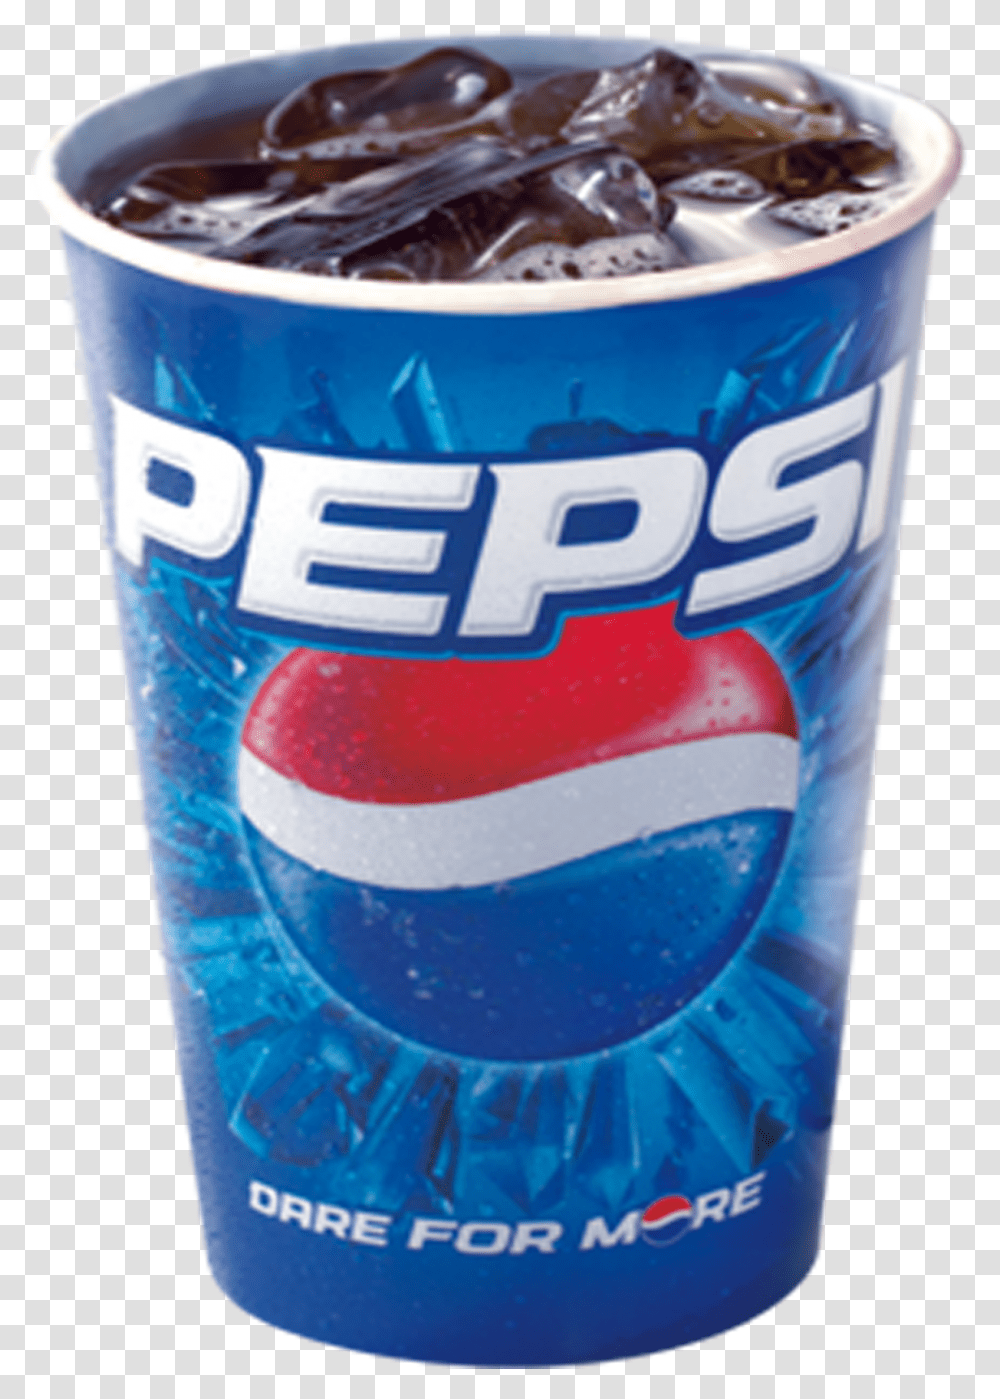 Pepsi Cup Coca Cola Pepsi, Soda, Beverage, Drink Transparent Png